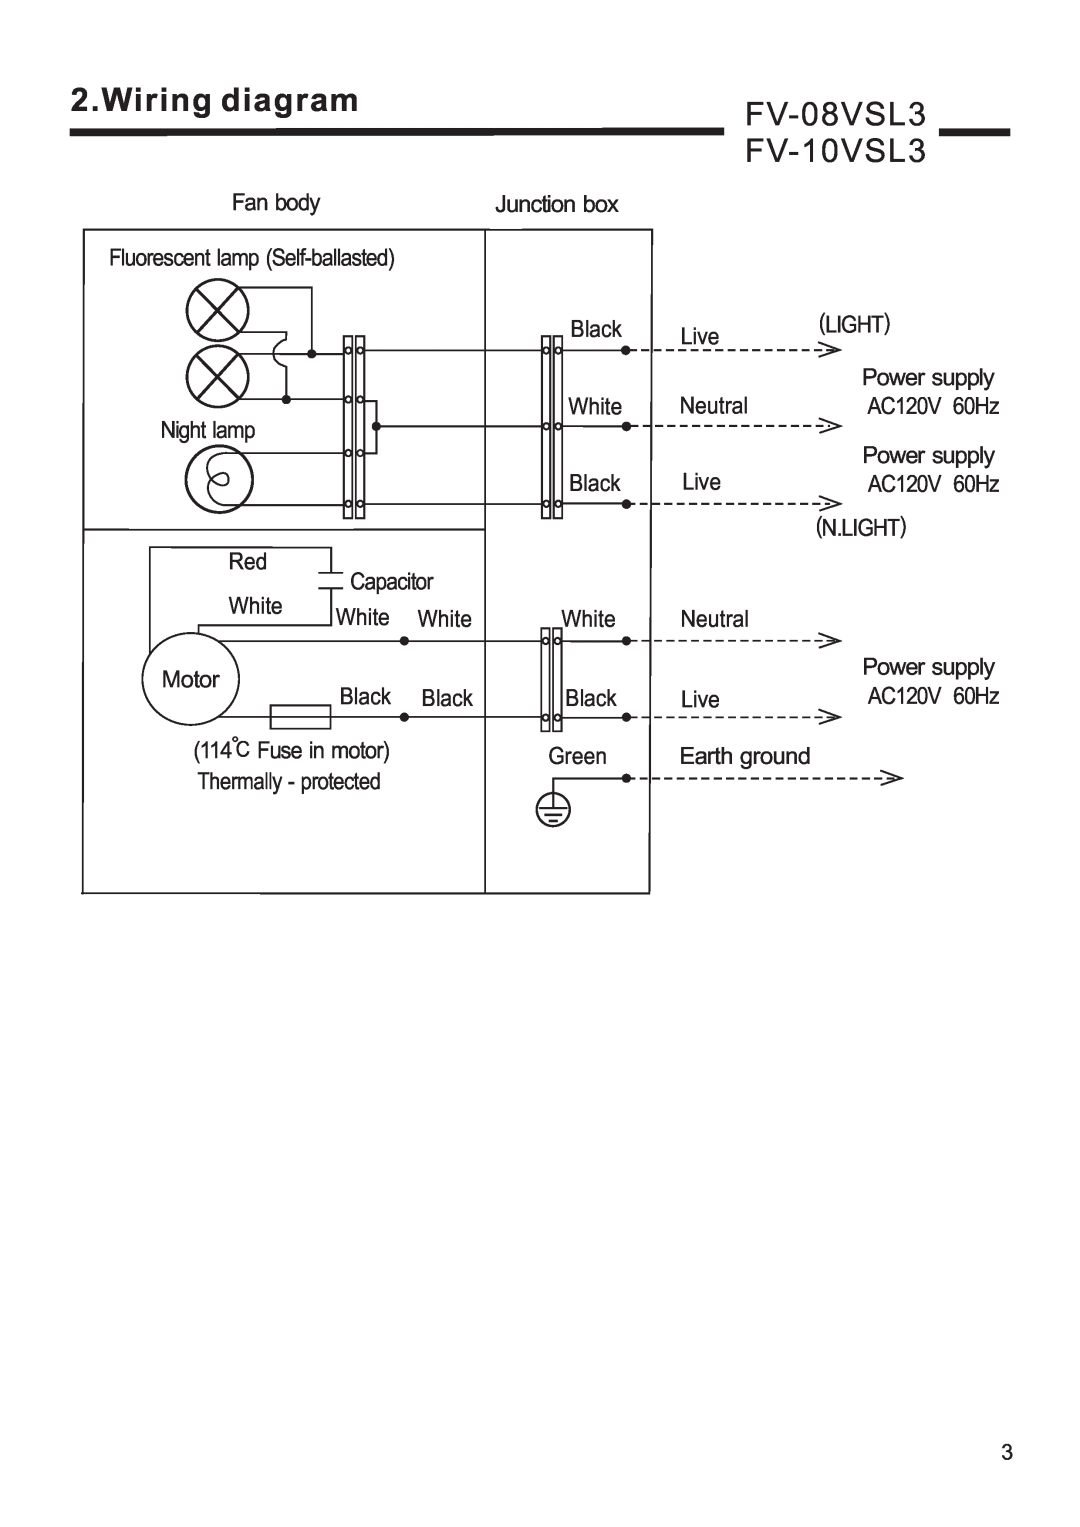 Panasonic service manual Wiring diagram, FV-08VSL3 FV-10VSL3, Thermally - protected 